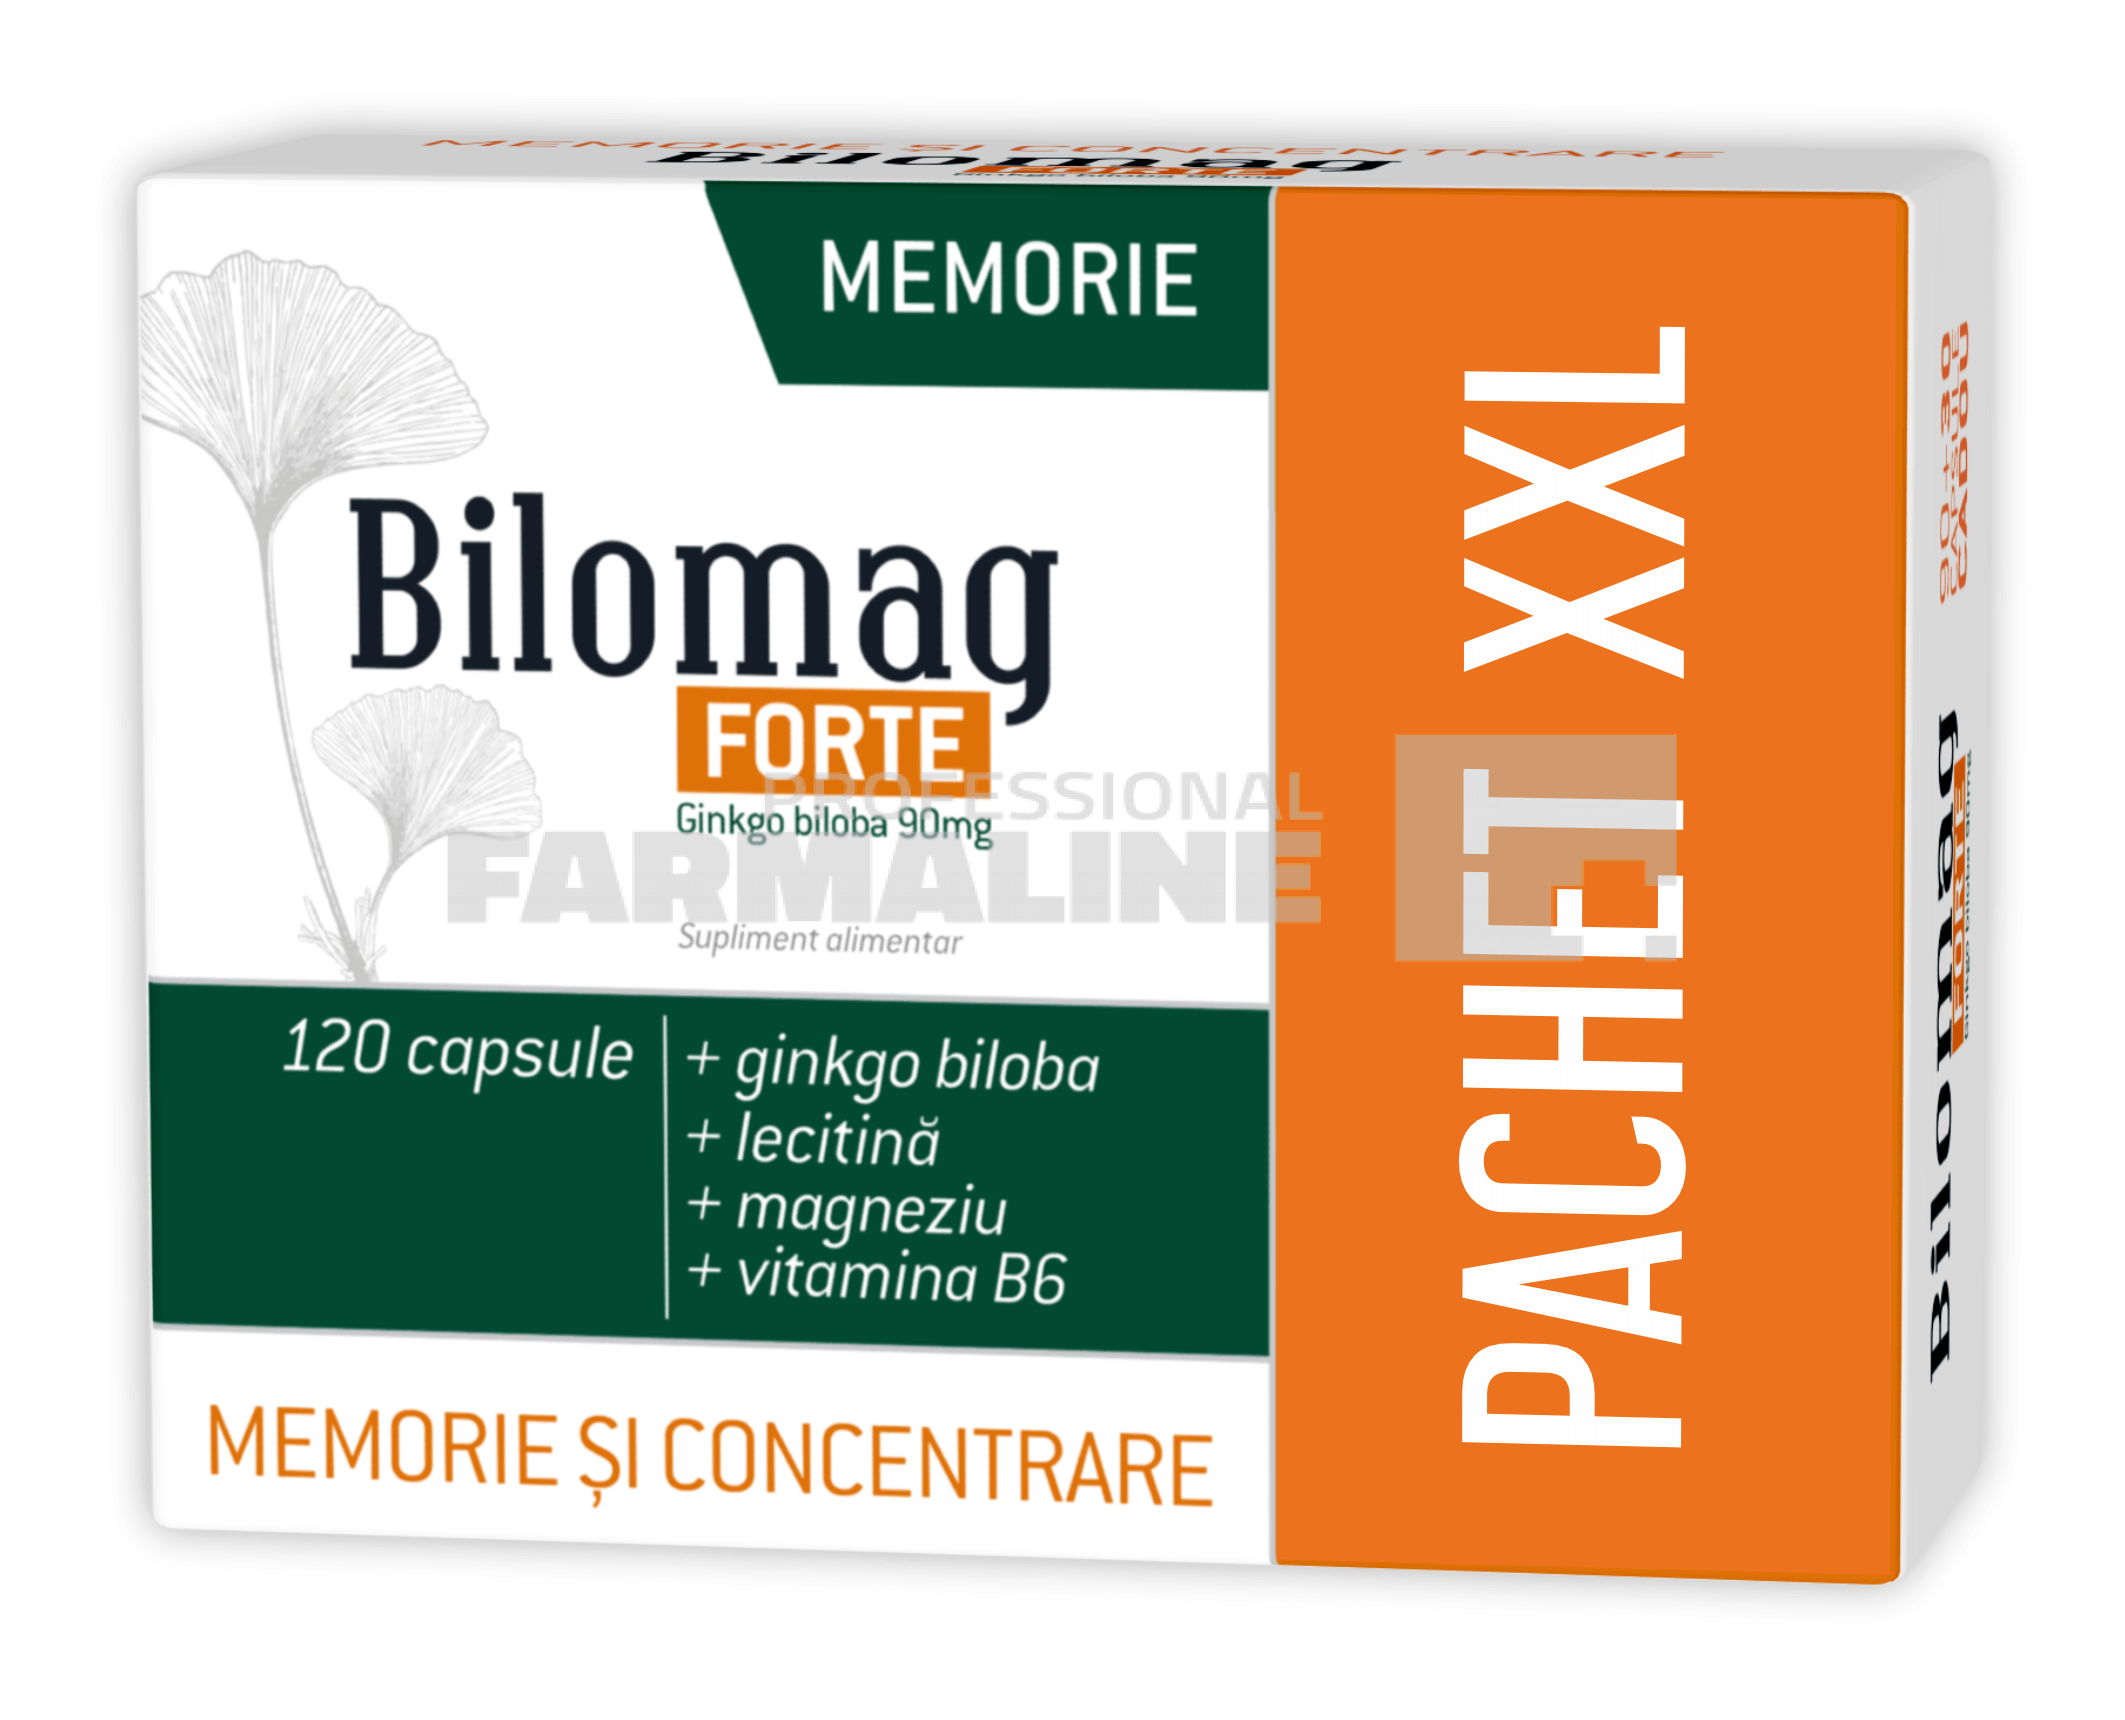 bilomag forte memorie 90 capsule + 30 cadou Bilomag Forte Memorie 90 mg 120 capsule (90 + 30 Cadou)